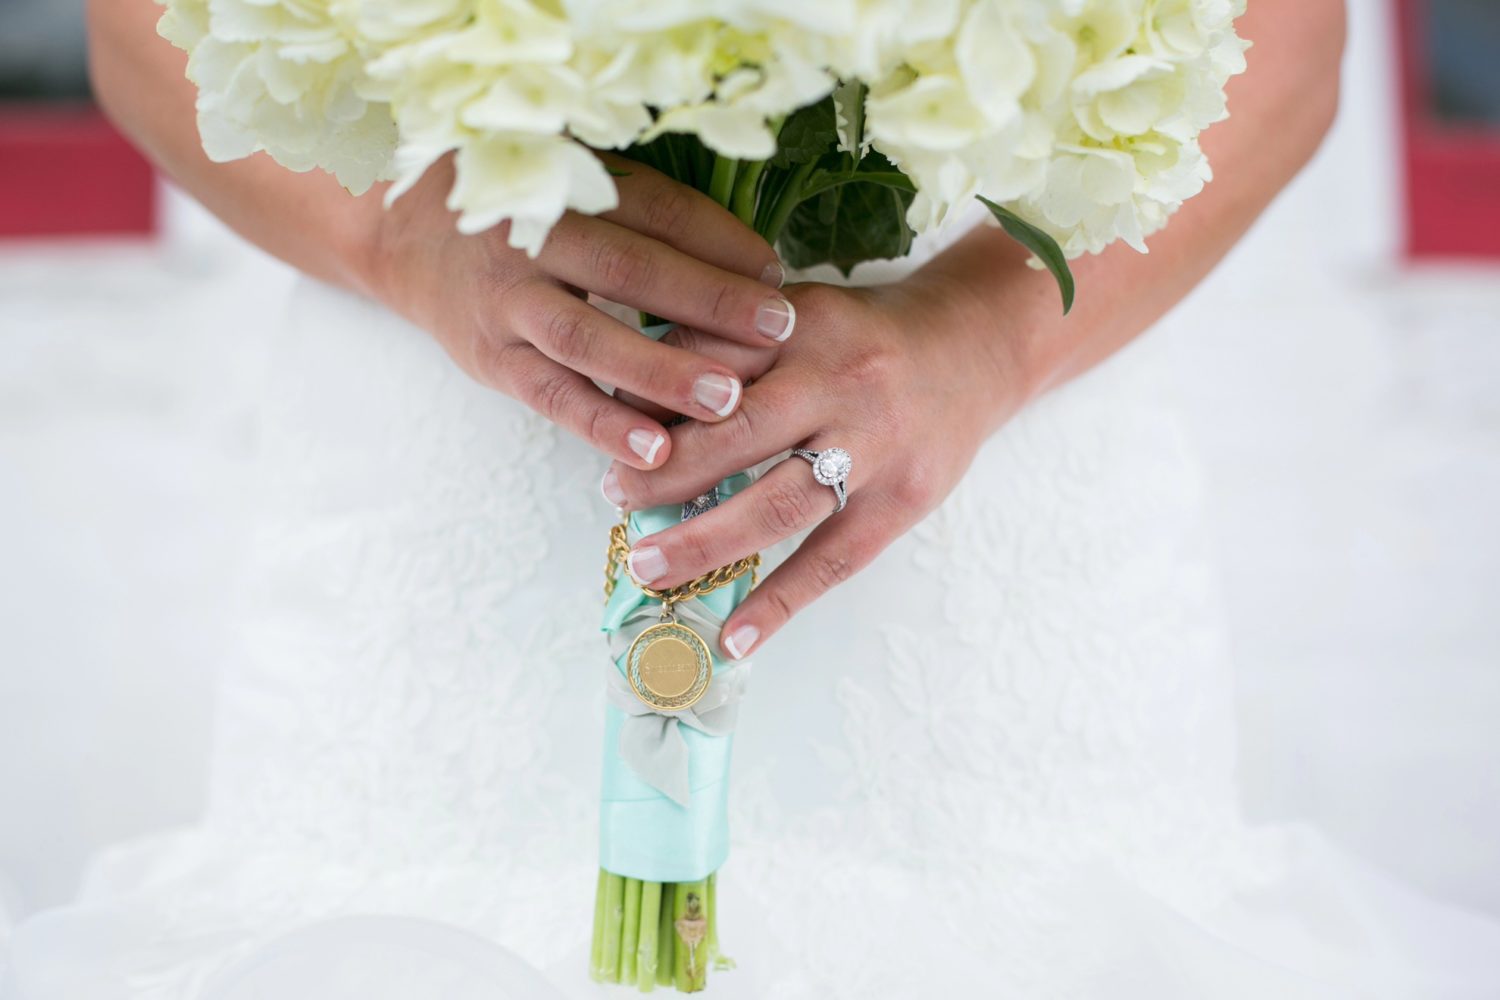 ivory bridal bouquet